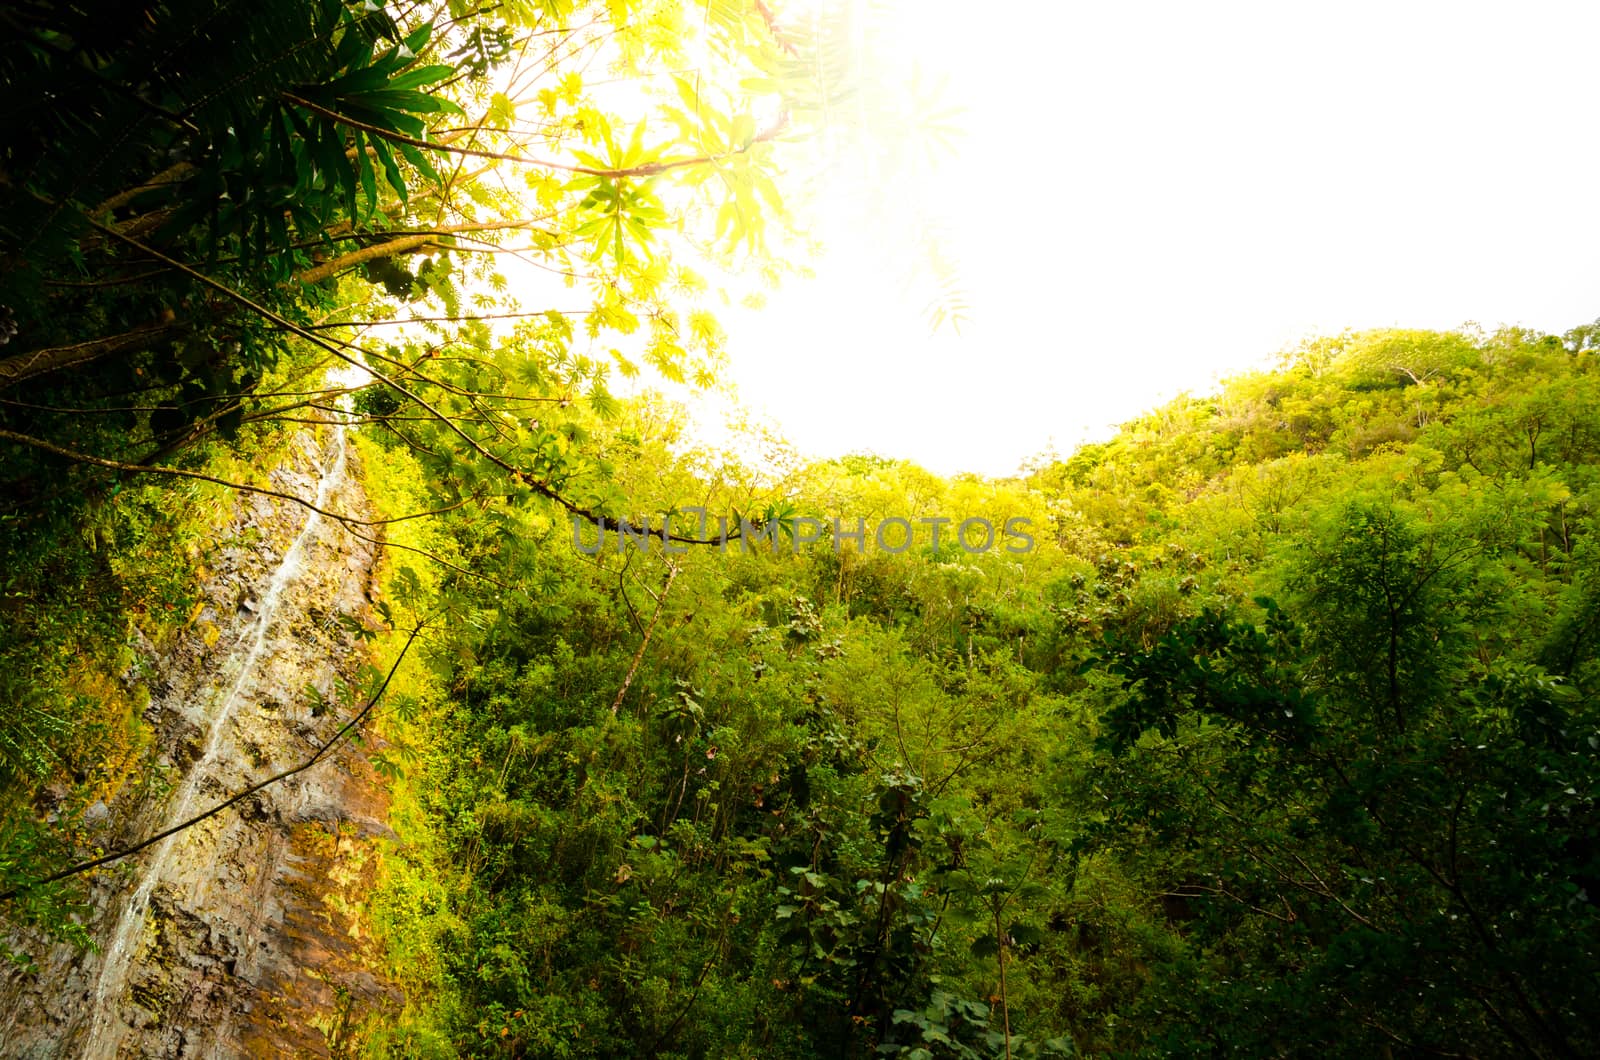 Water cascade among  green vegetation in Hawaii by mikelju